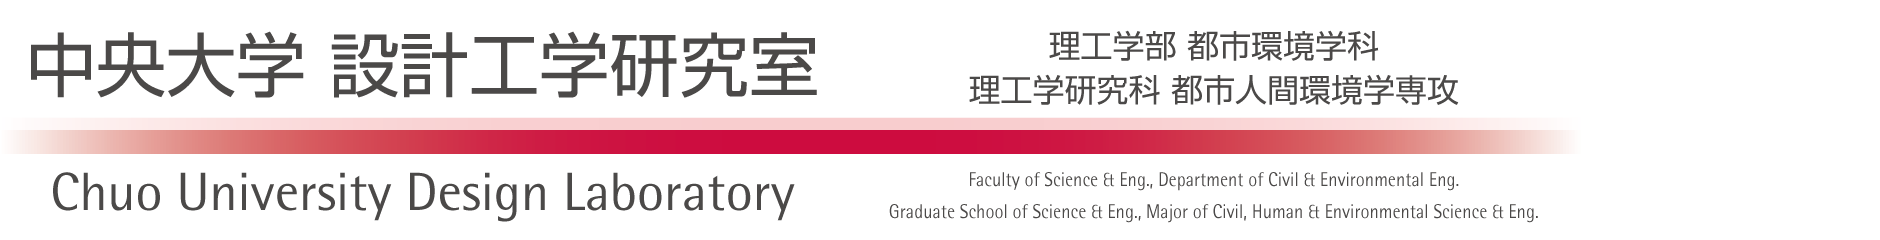 Chuo University Design Laboratory